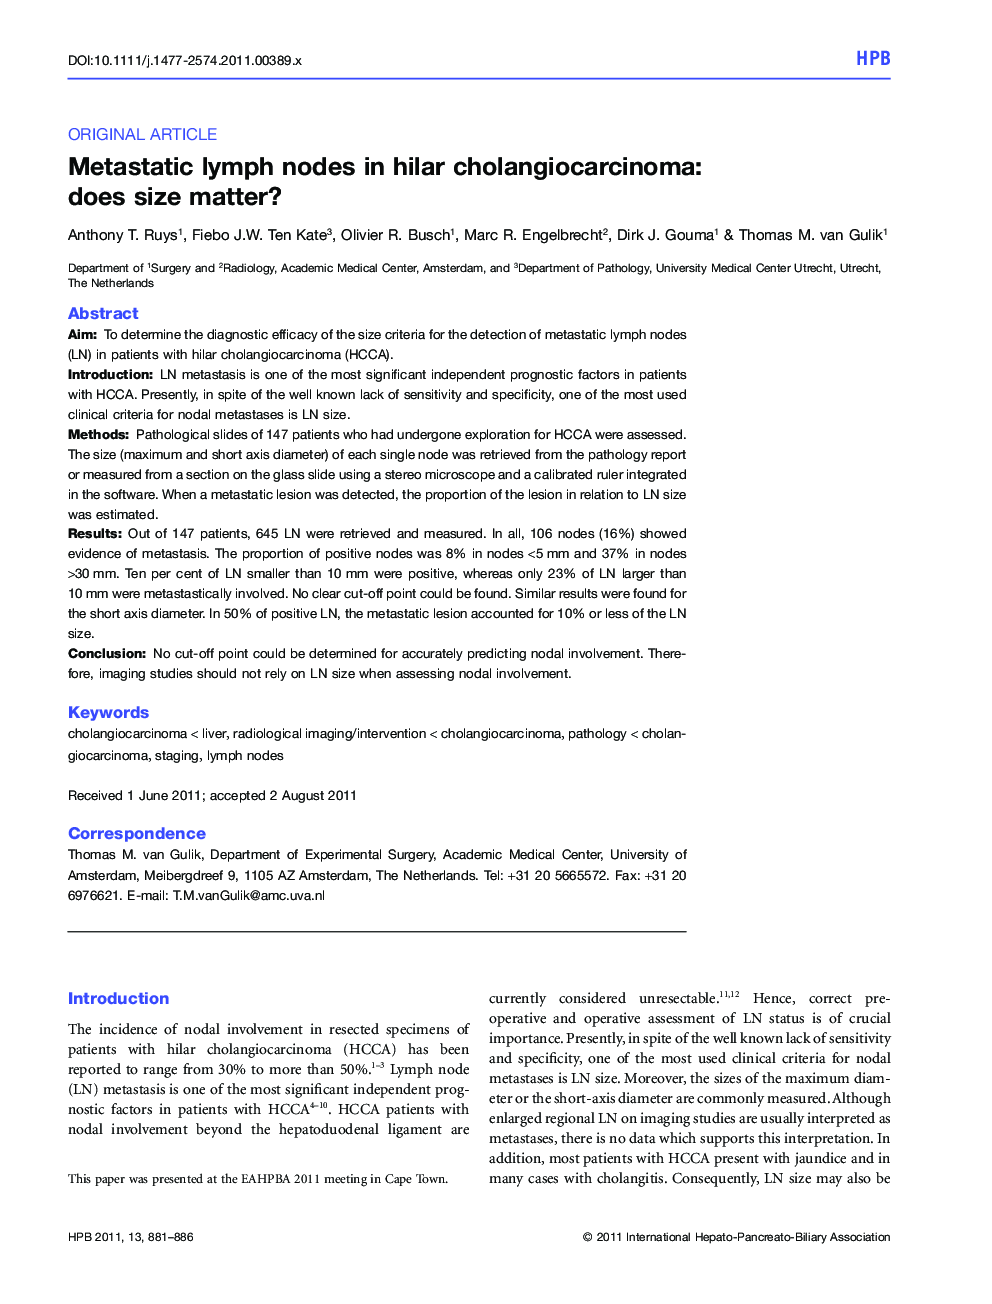 Metastatic lymph nodes in hilar cholangiocarcinoma: does size matter?